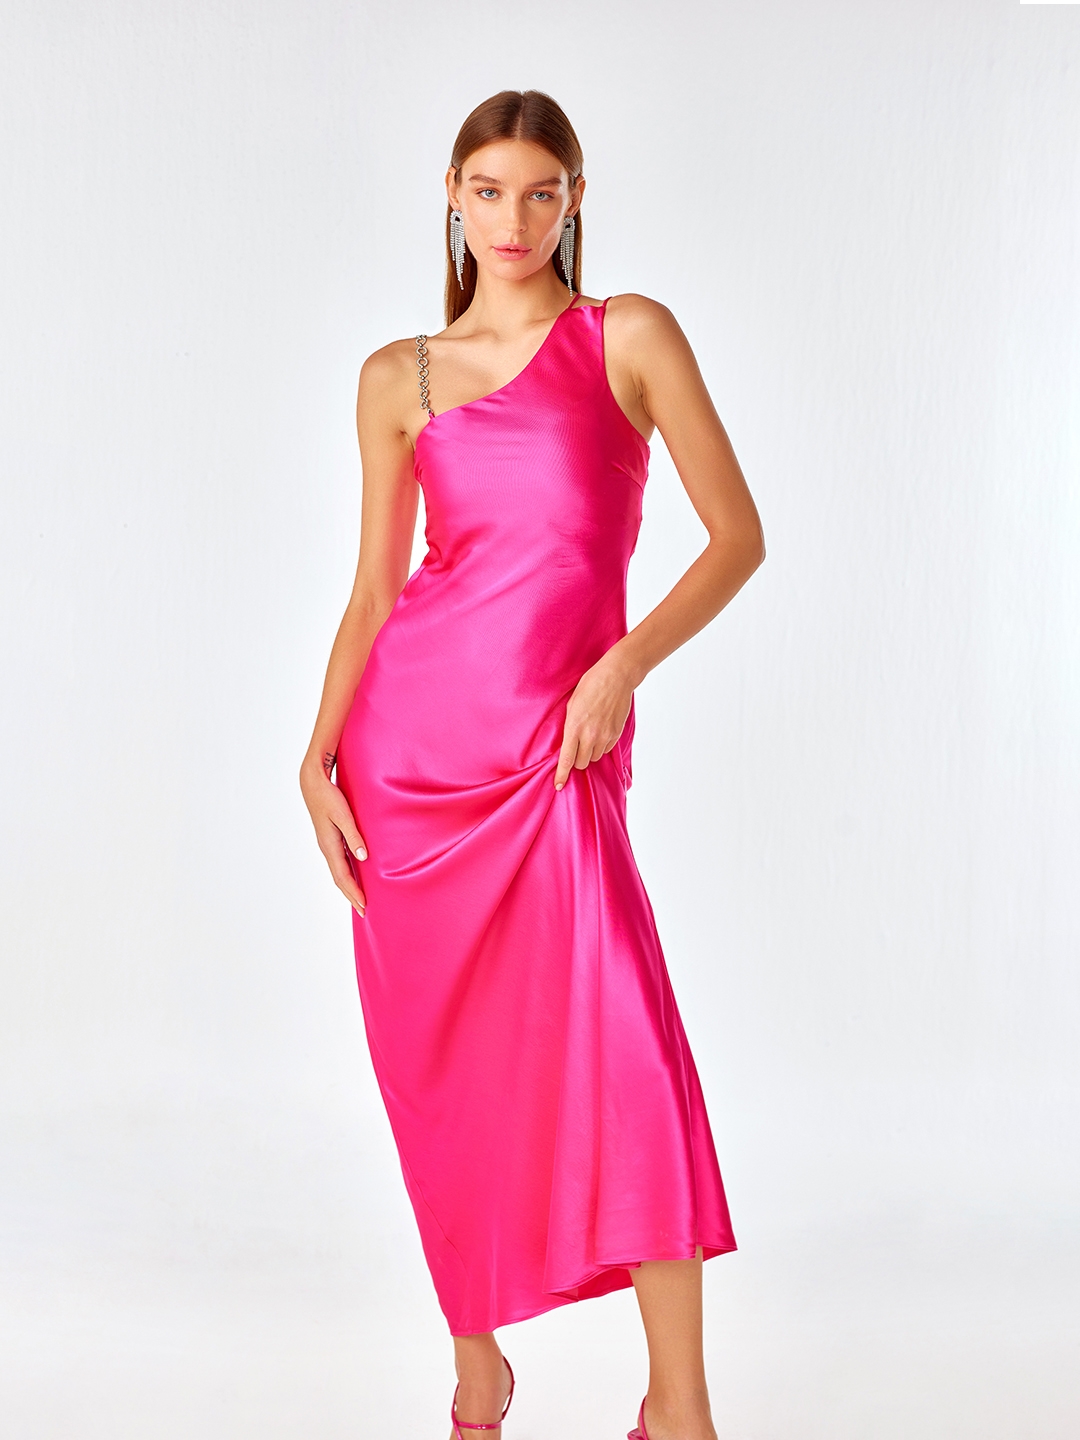 NEW Maxi Dress / Olive Green Kaftan Linen Dress / One Shoulder Dress /  Extravagant Long Dress / Party Dress by AAKASHA A03144 - Etsy